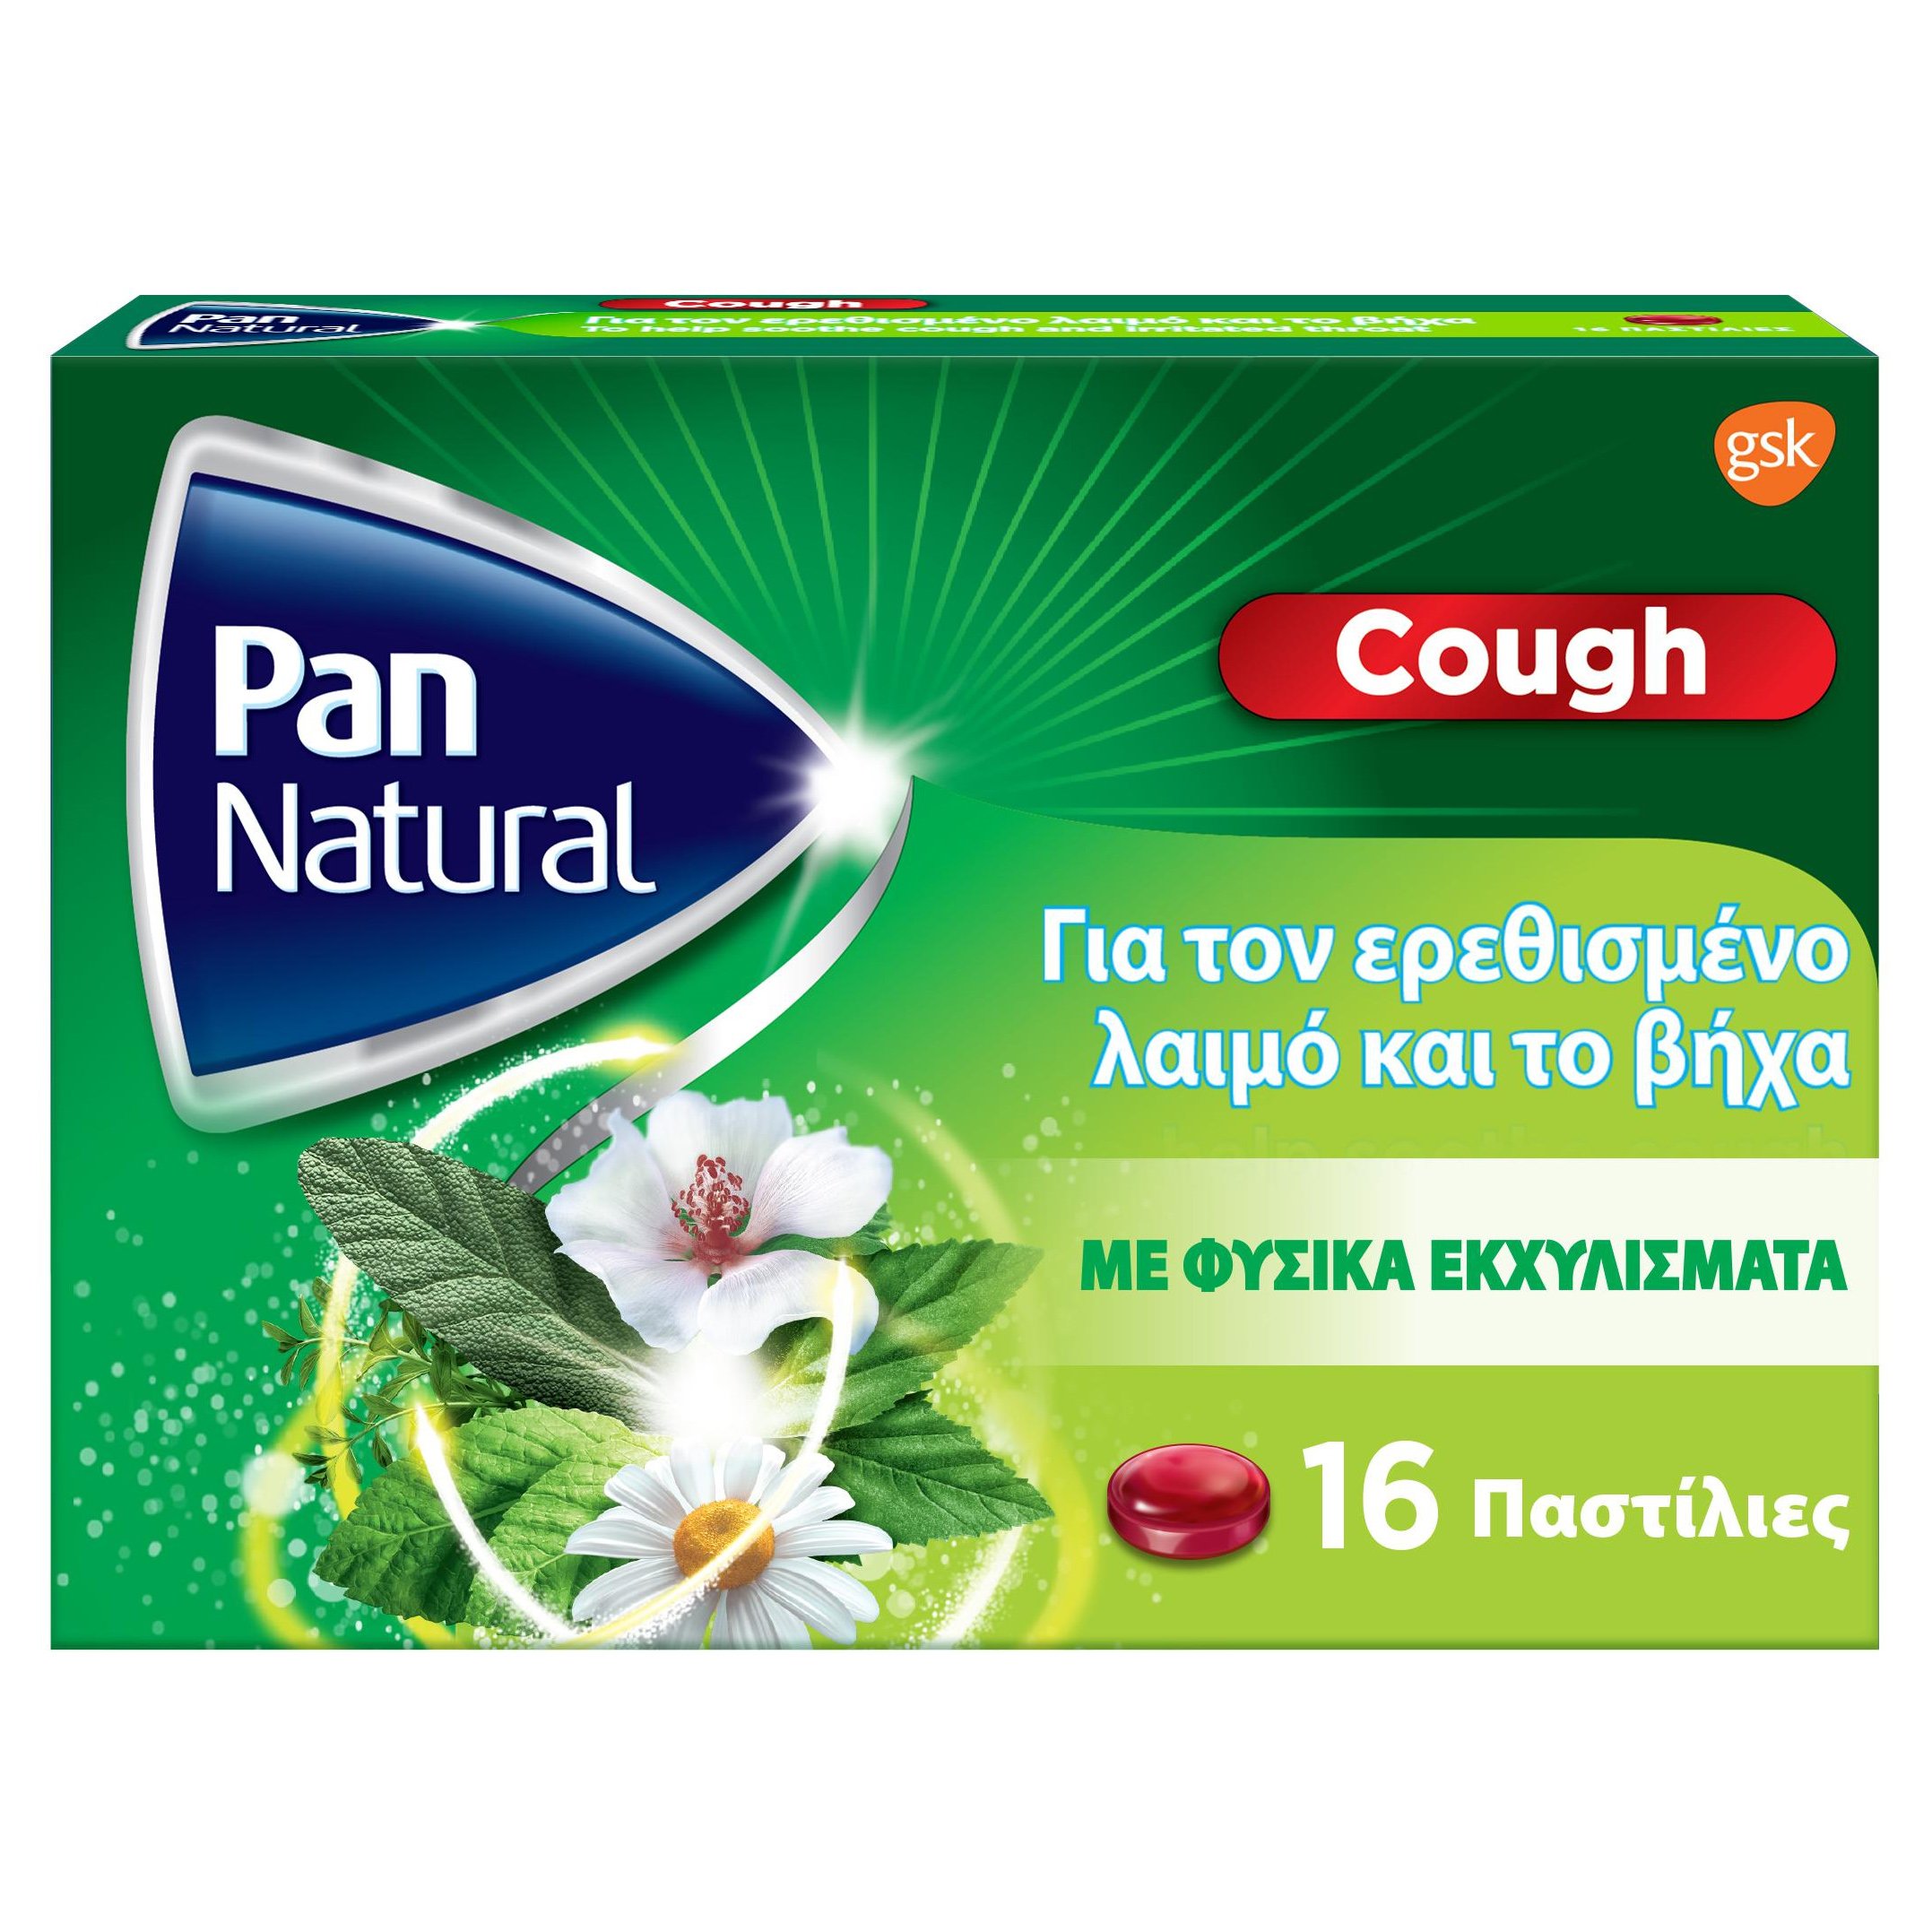 Glaxosmithkline Pan Natural Cough Παστίλιες για Φυσική Ανακούφιση από τον Ερεθισμένο Λαιμό & το Βήχα, με Γεύση Βατόμουρο 16 Παστίλιες